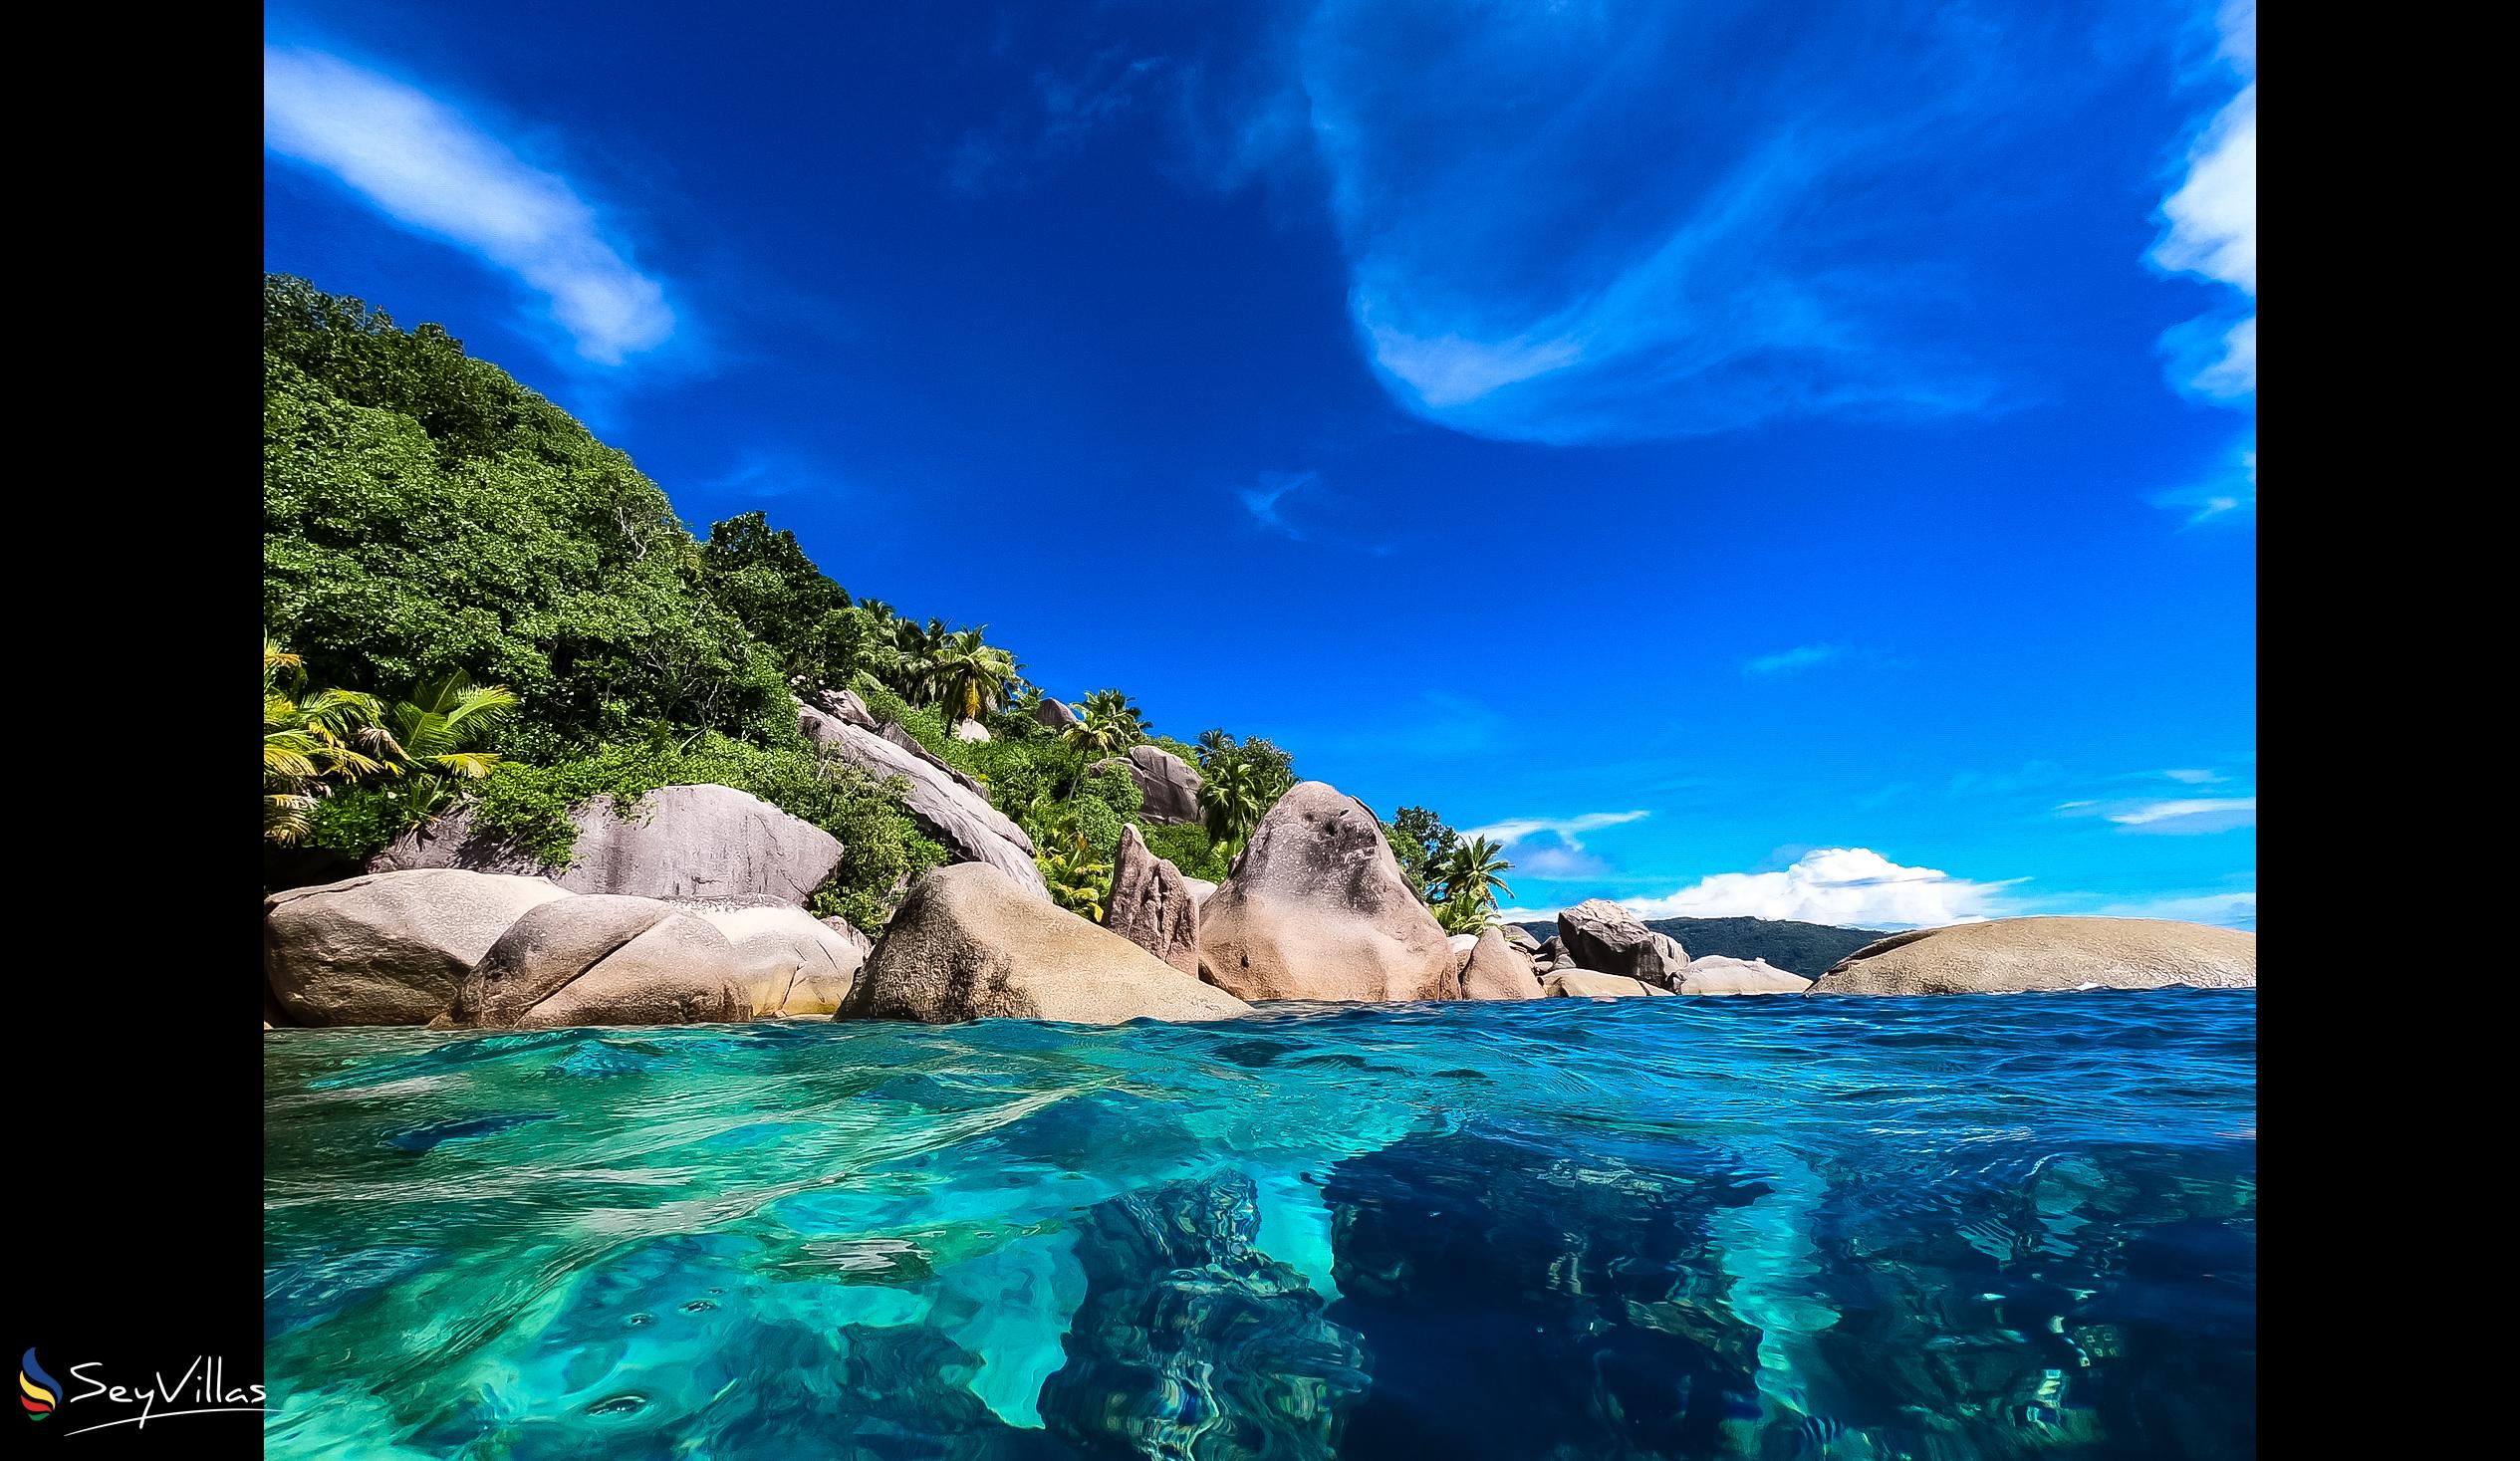 Photo 26: Dream Yacht Silhouette Dream Premium - Location - Seychelles (Seychelles)